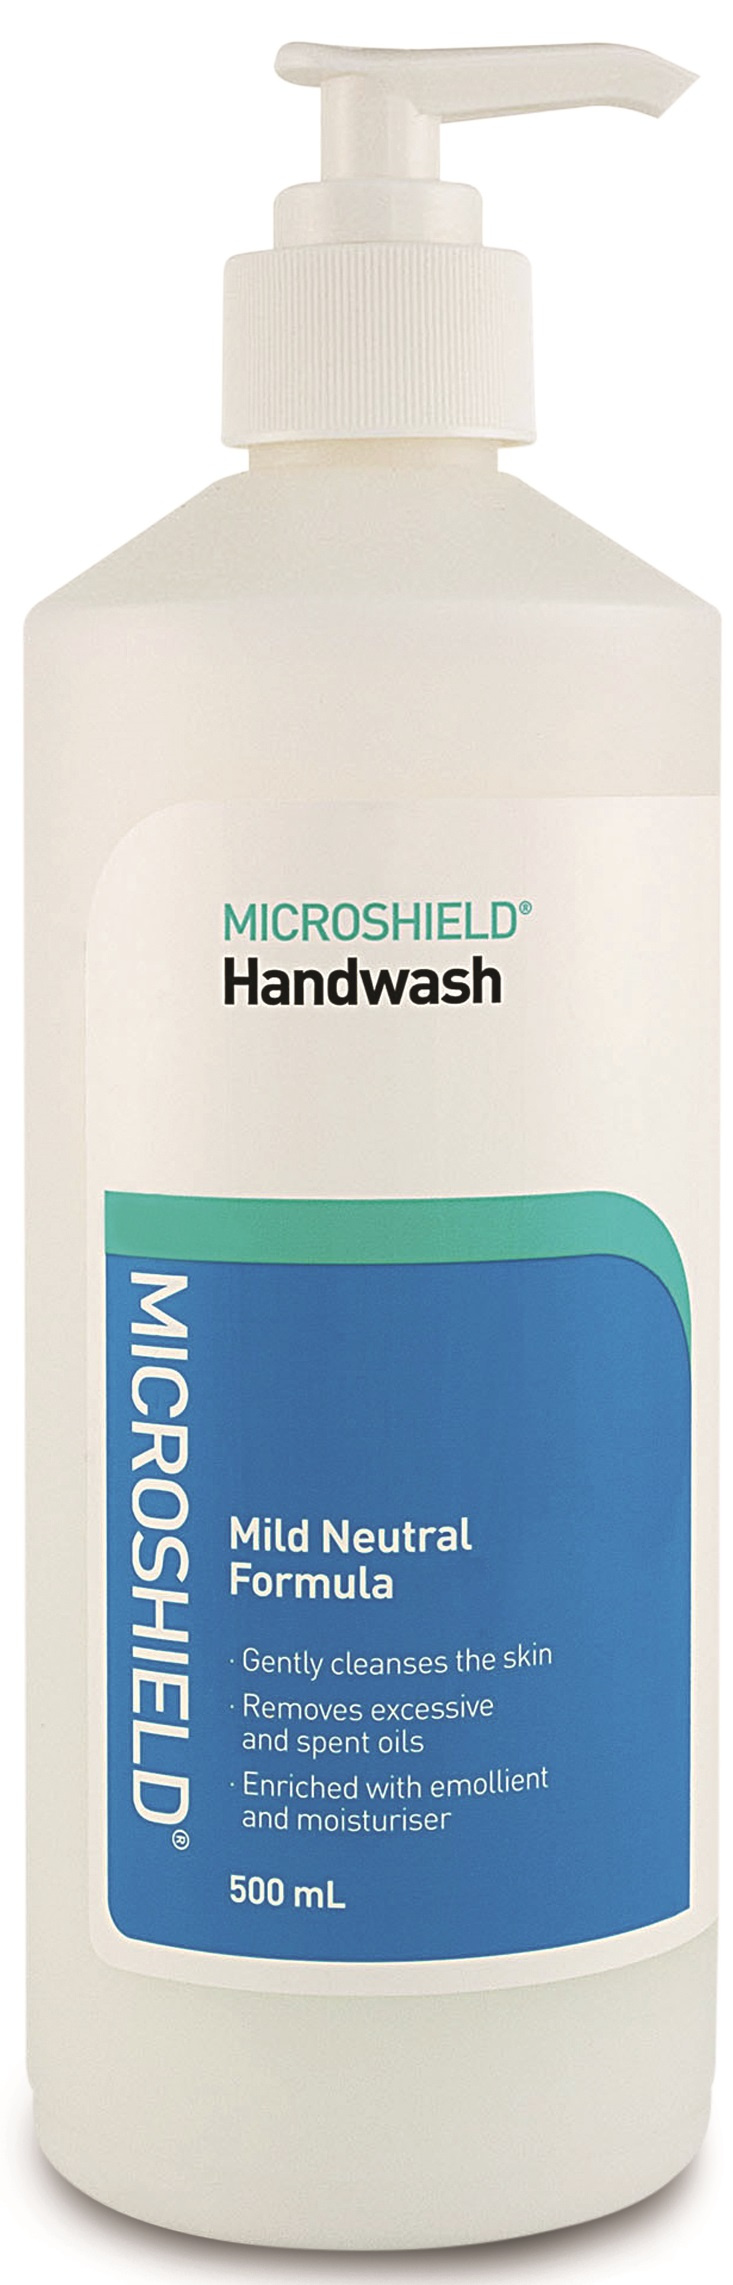 Microshield Handwash 500ml image 0